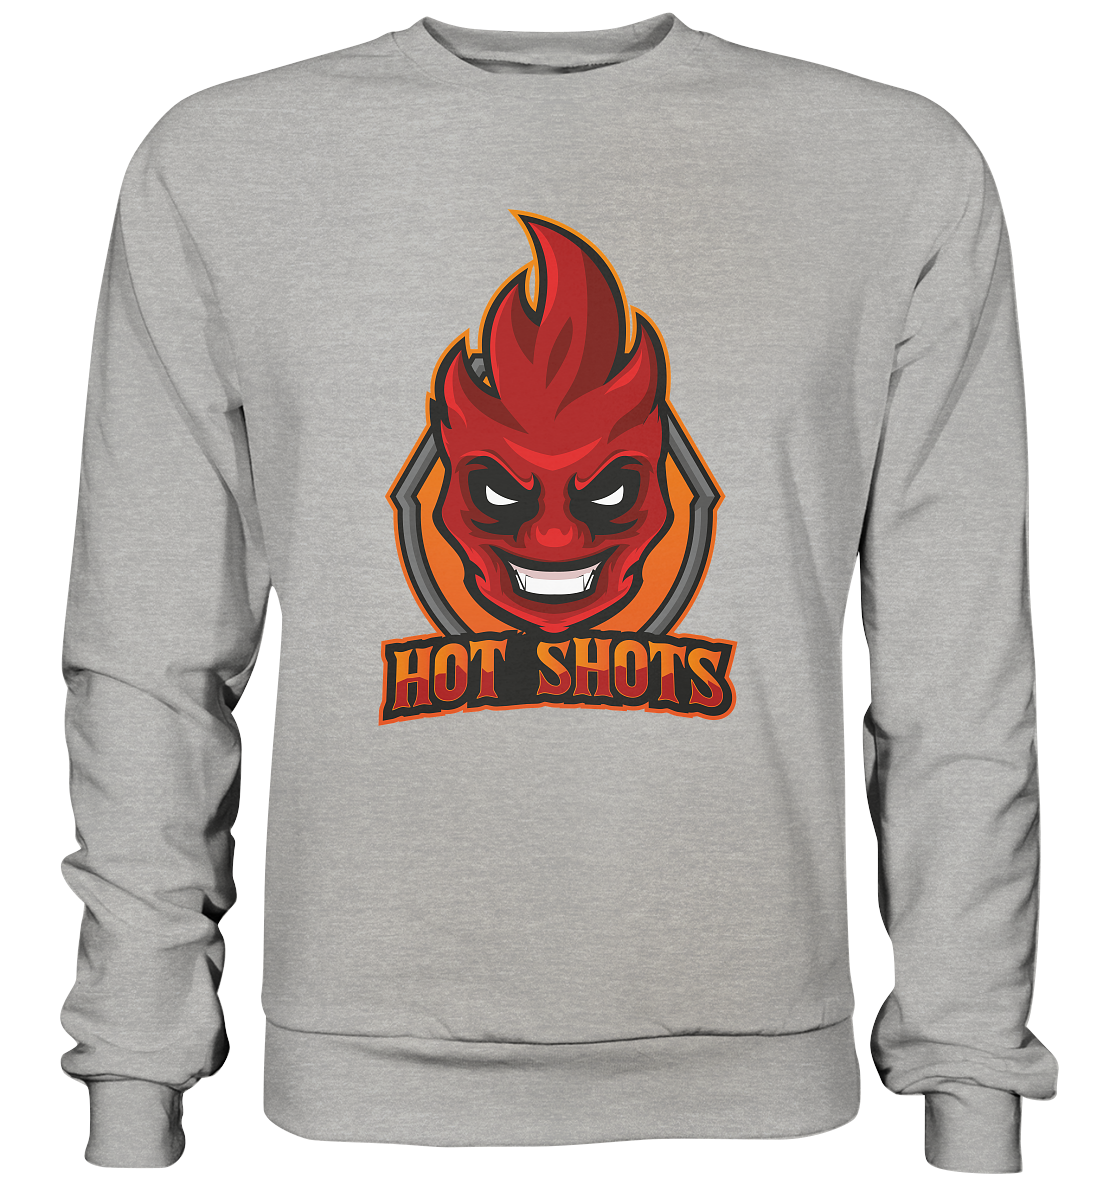 HOT SHOTS - Basic Sweatshirt